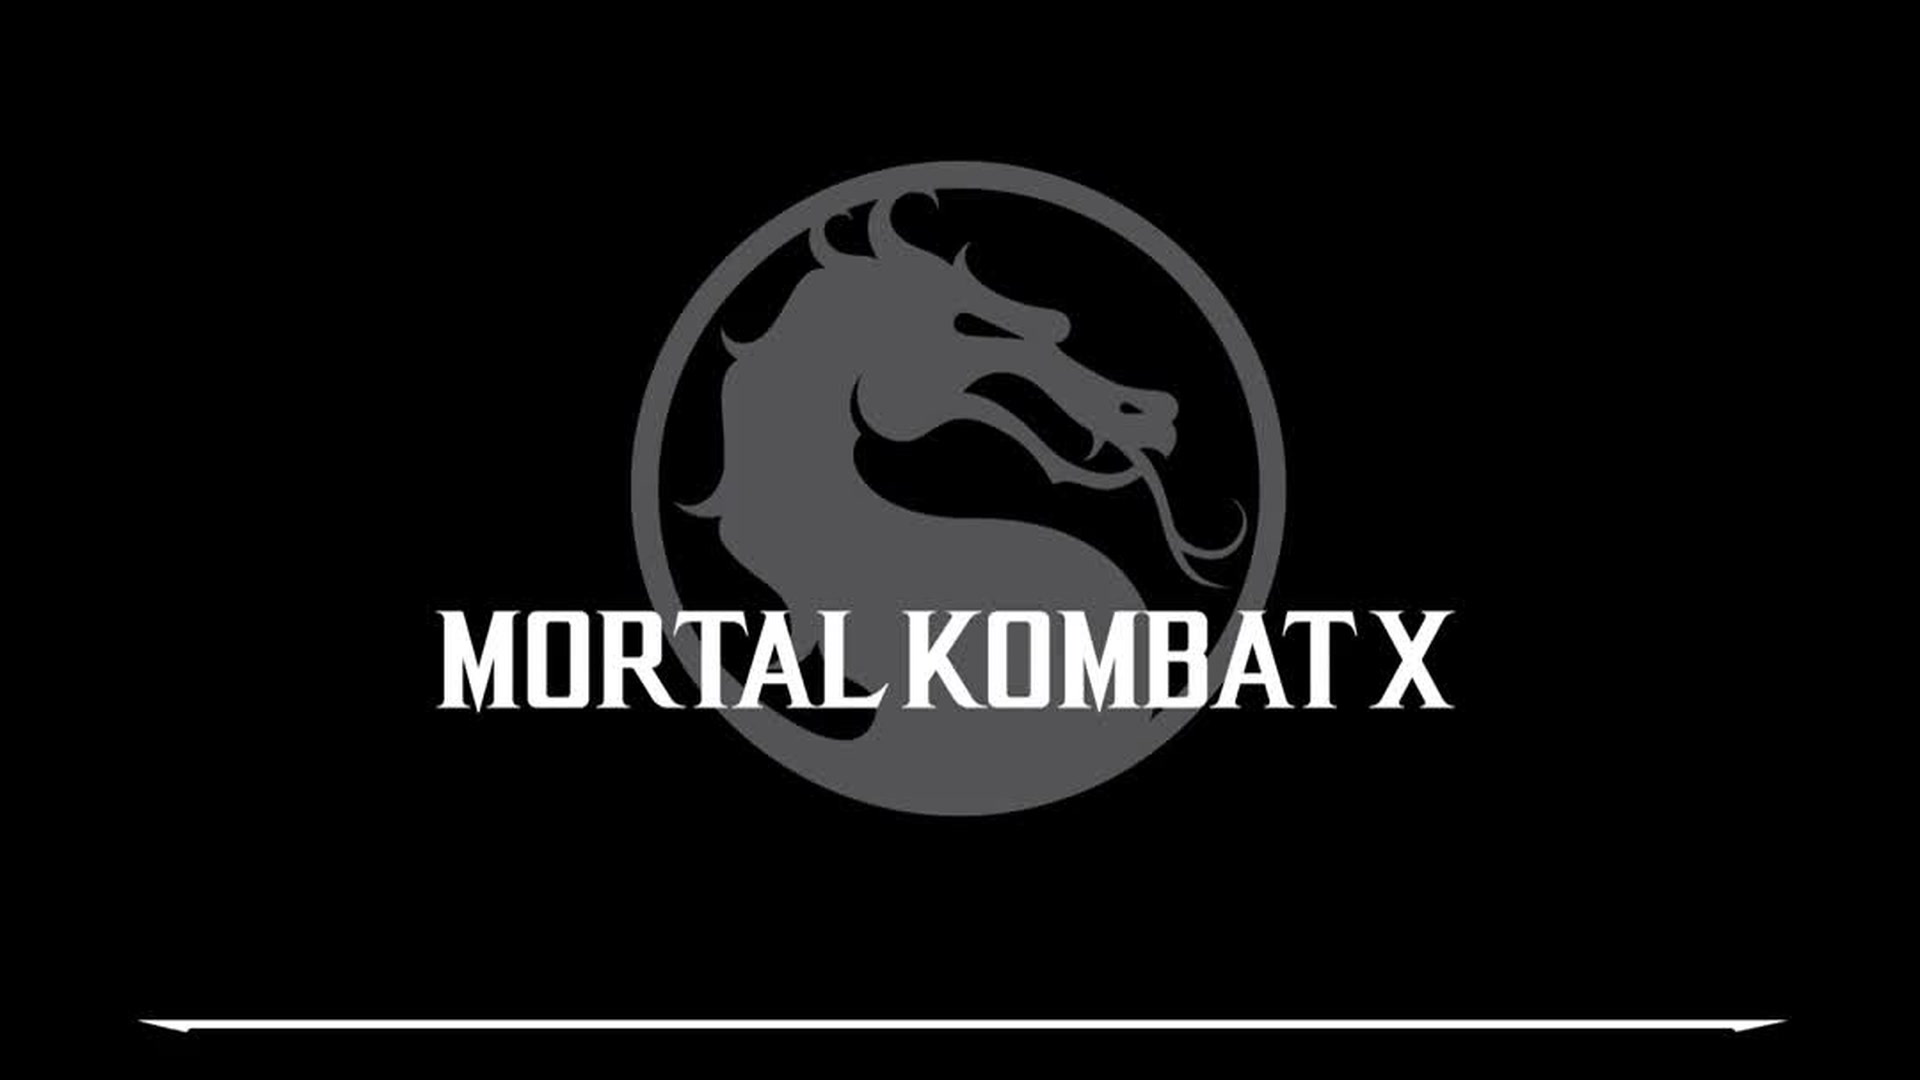 MORTAL KOMBAT X · Kano Knife To Meet You Fatality [HD] 60fps